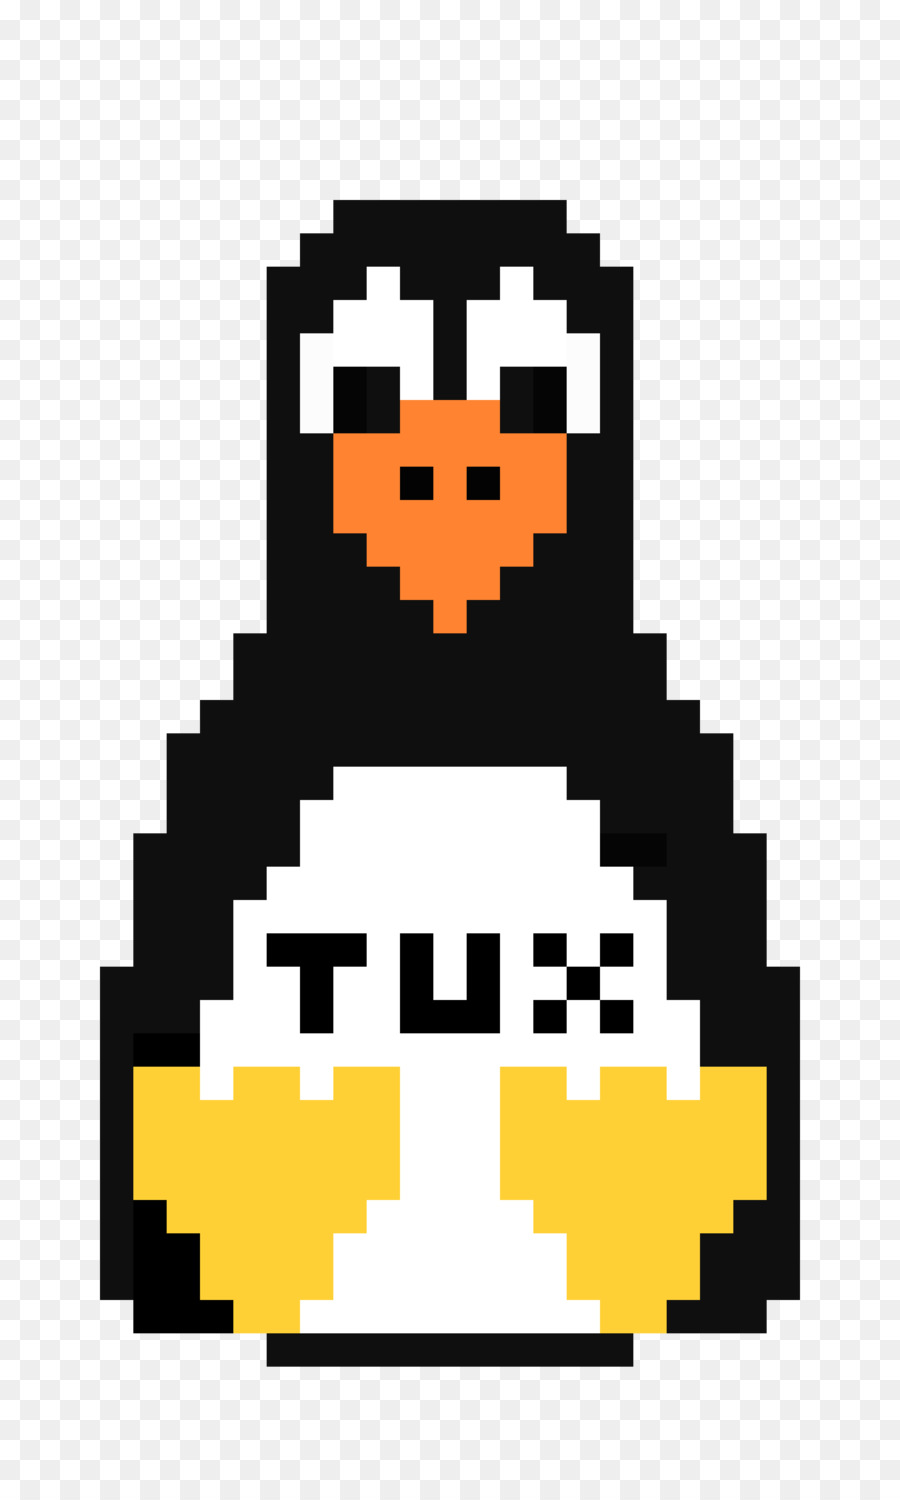 Pinguin Tux Unix und Linux: Visual QuickStart Guide-Pixel-Kunst - Pinguin